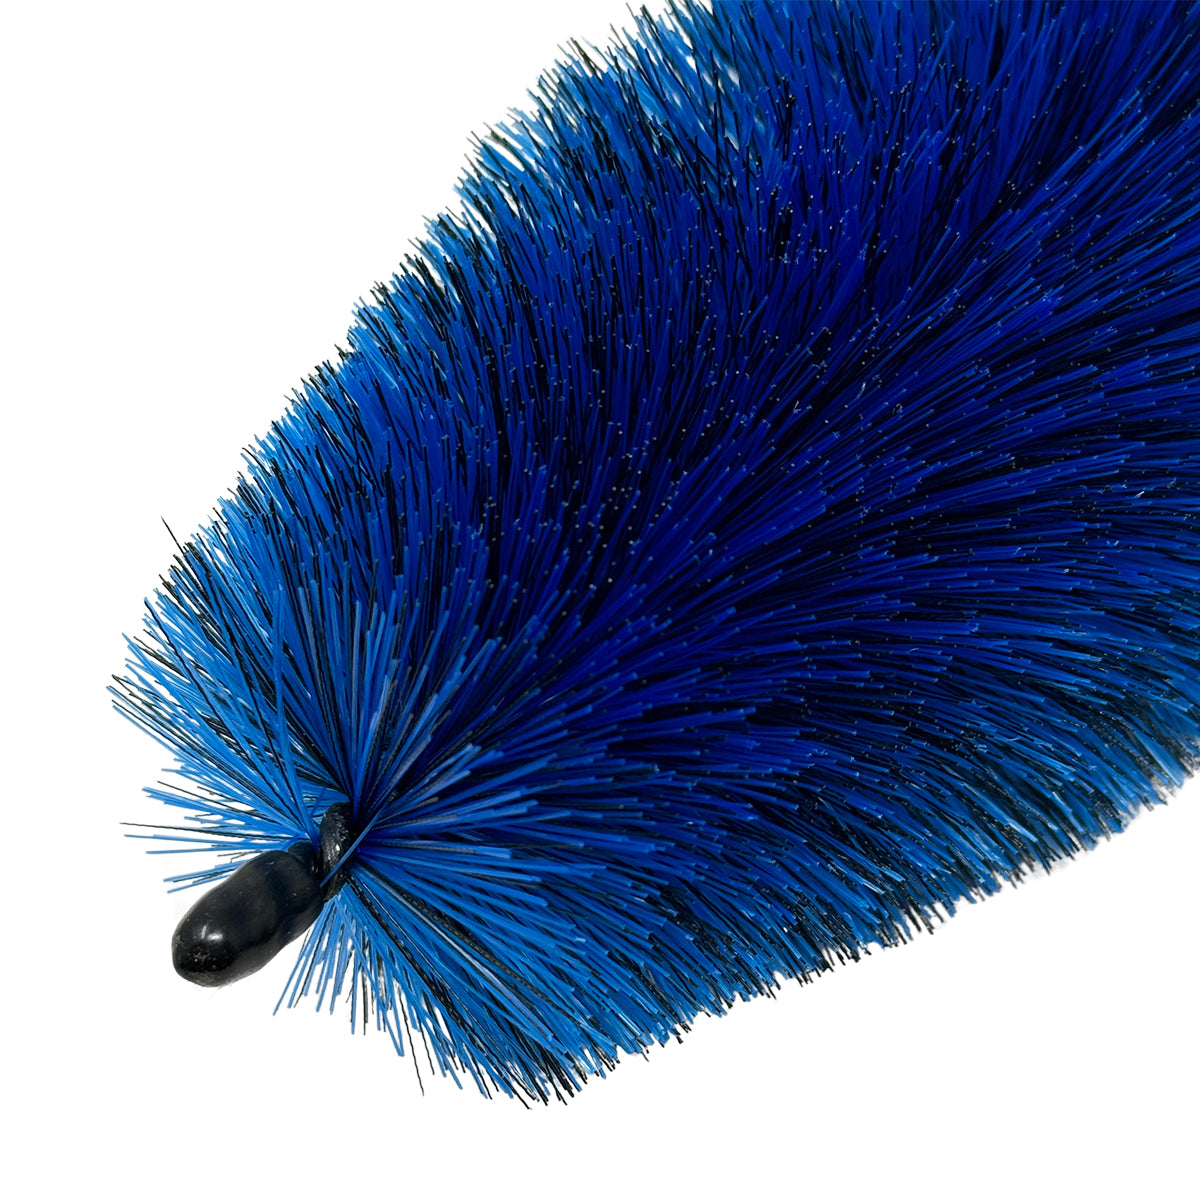 EZ Detail Wheel Cleaning Brush (Blue)